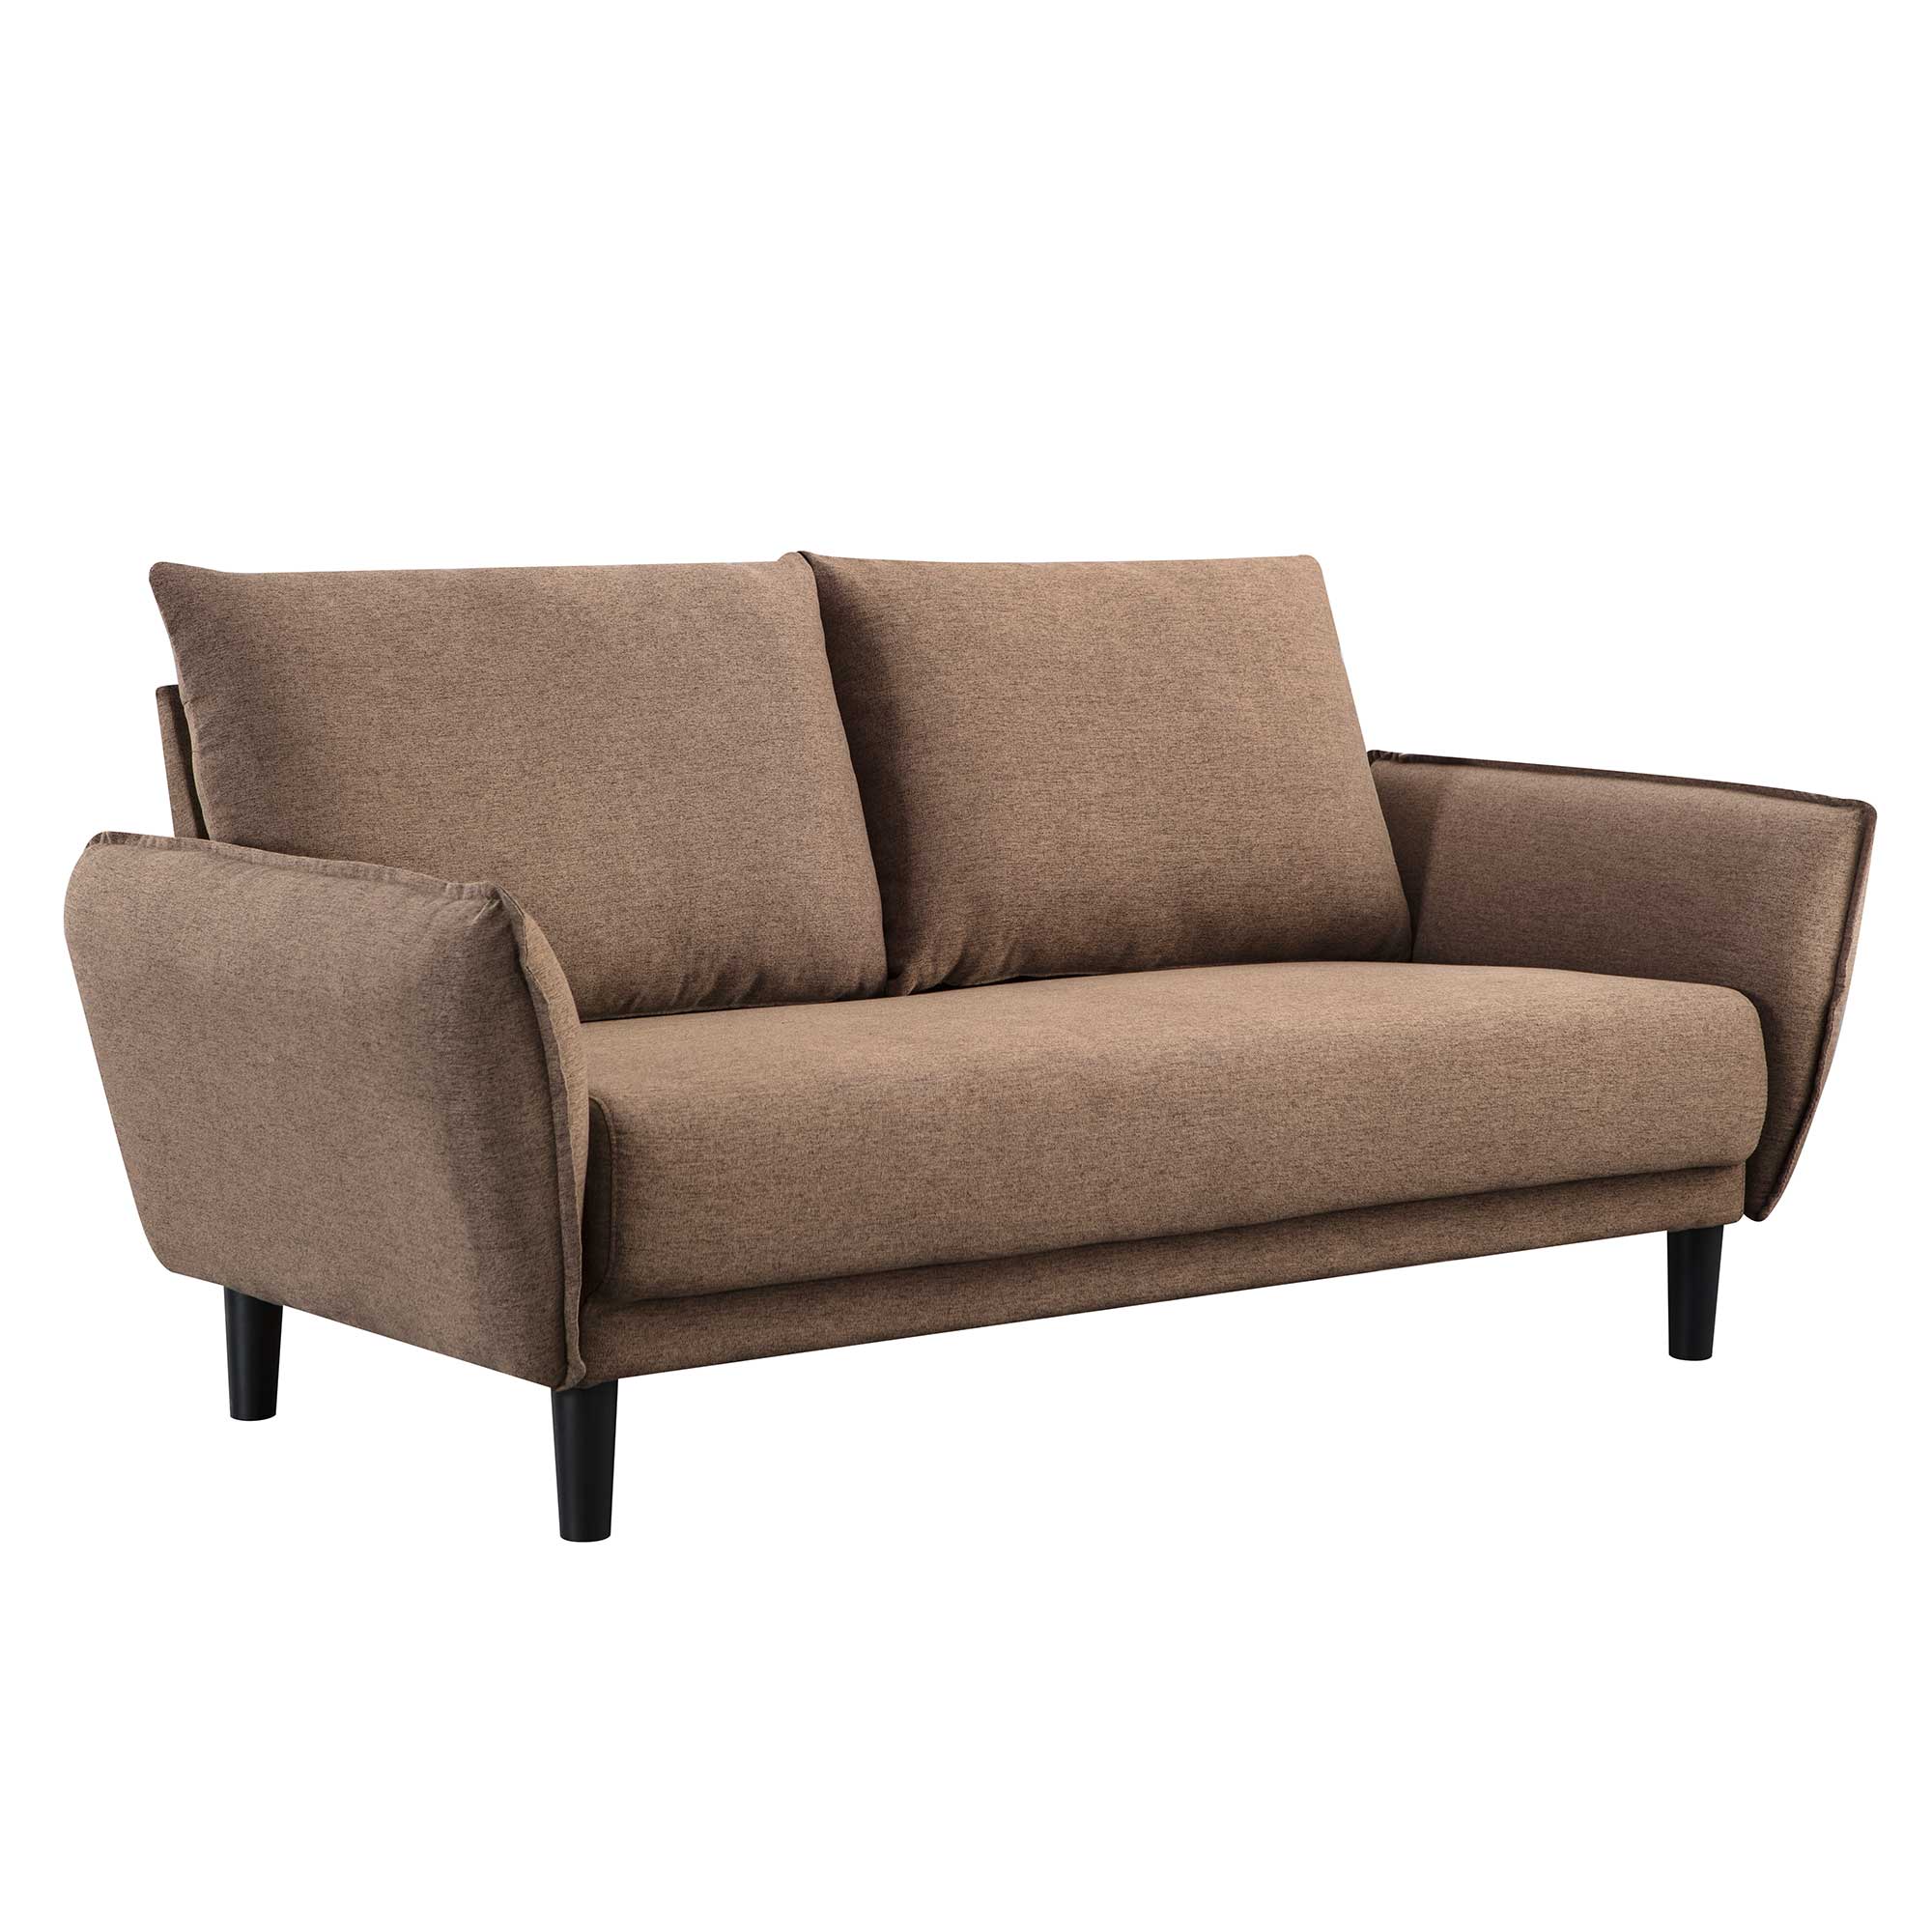 RaDEWAY Modern Sofa for Living Room